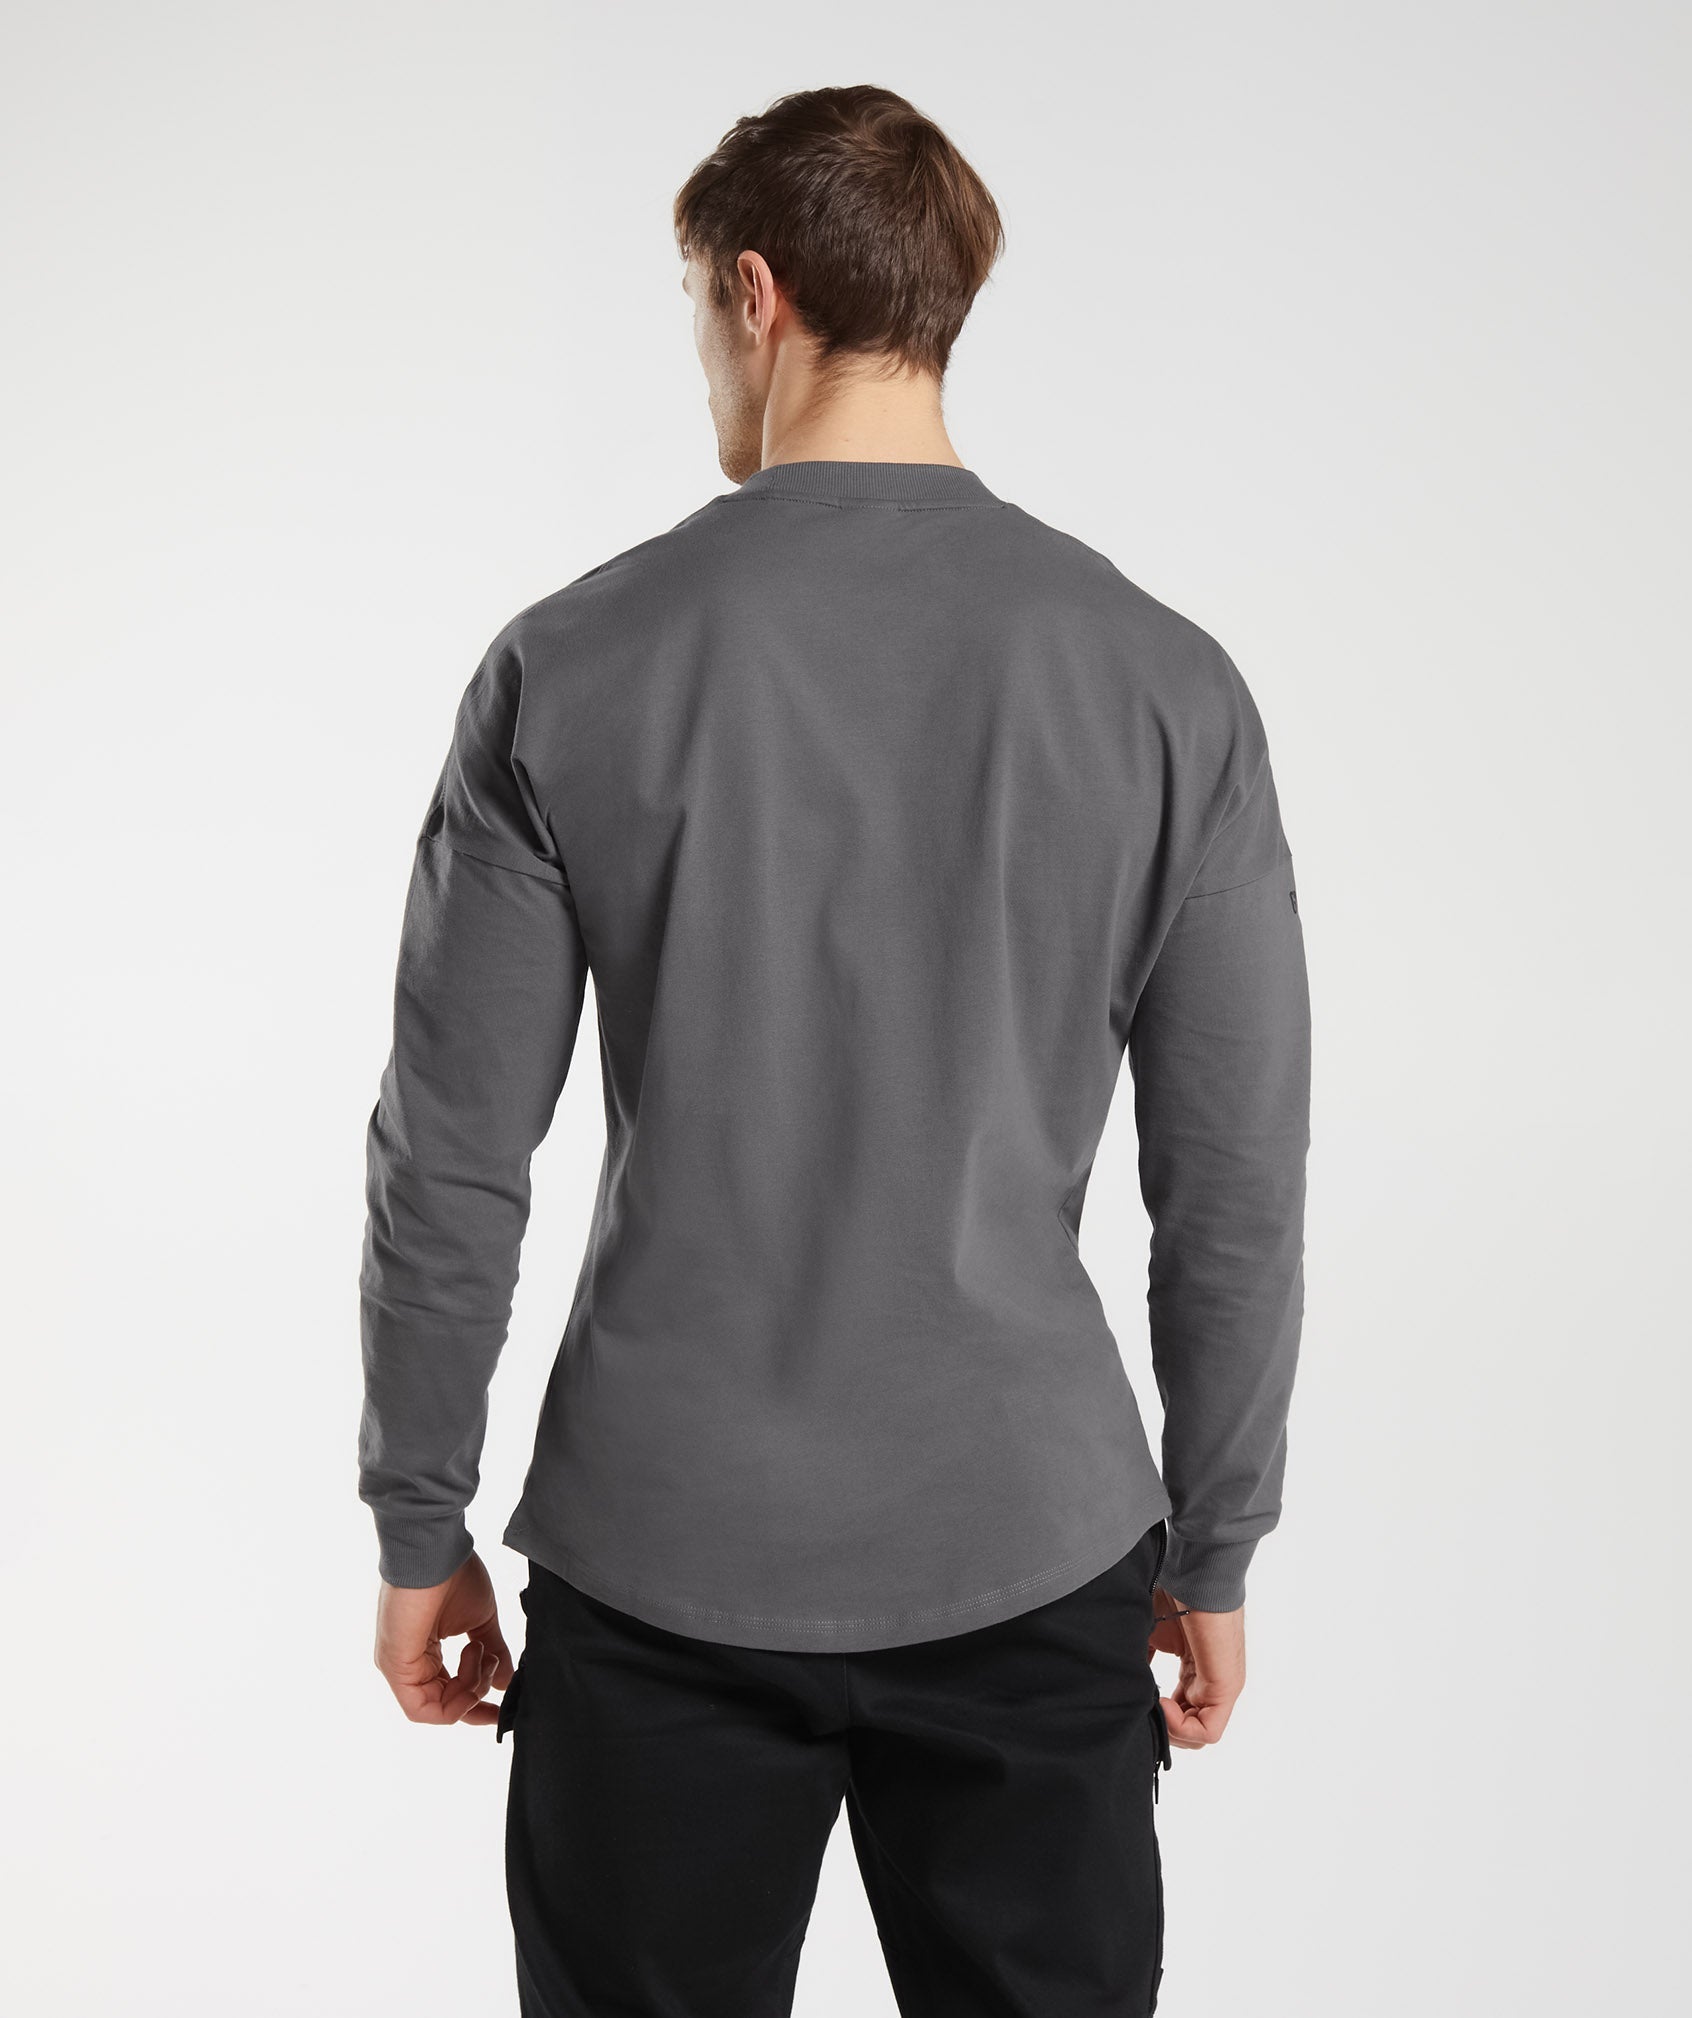 GS x David Laid Oversized Long Sleeve T-Shirt product image 2